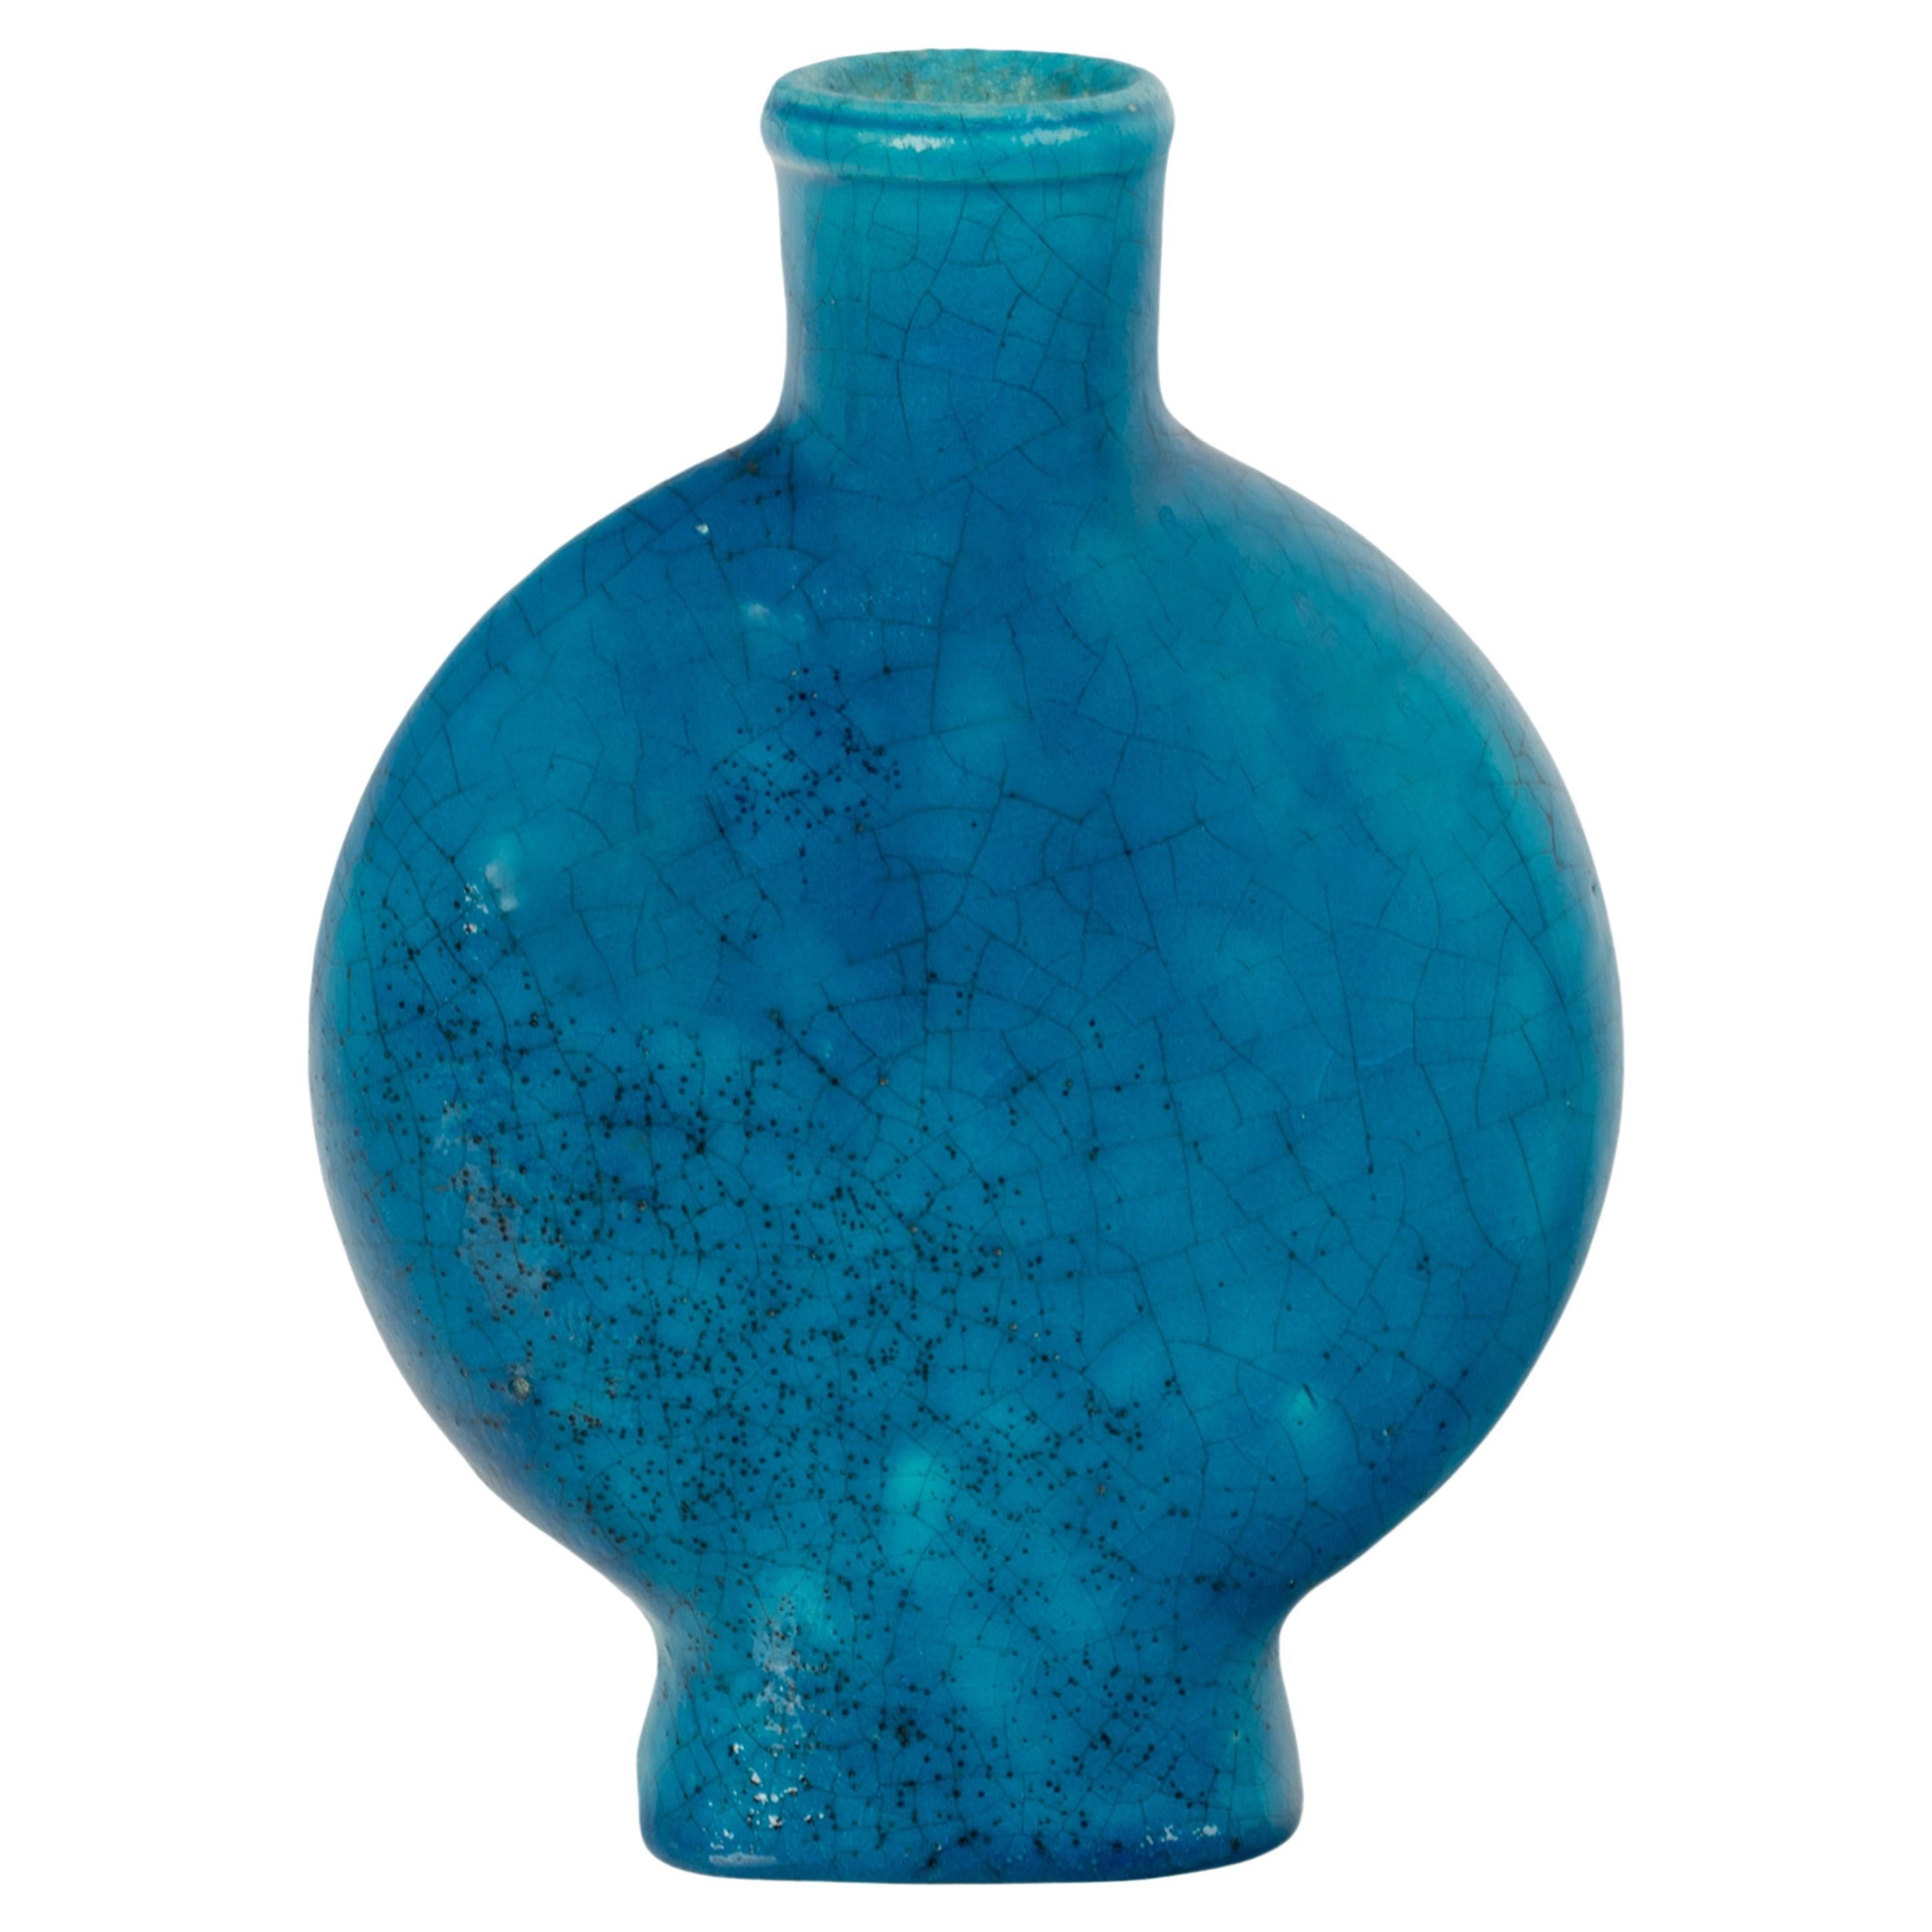 Antique French Art Deco Turquoise Blue Pottery Vase Edmond Lachenal Signed 1930 For Sale